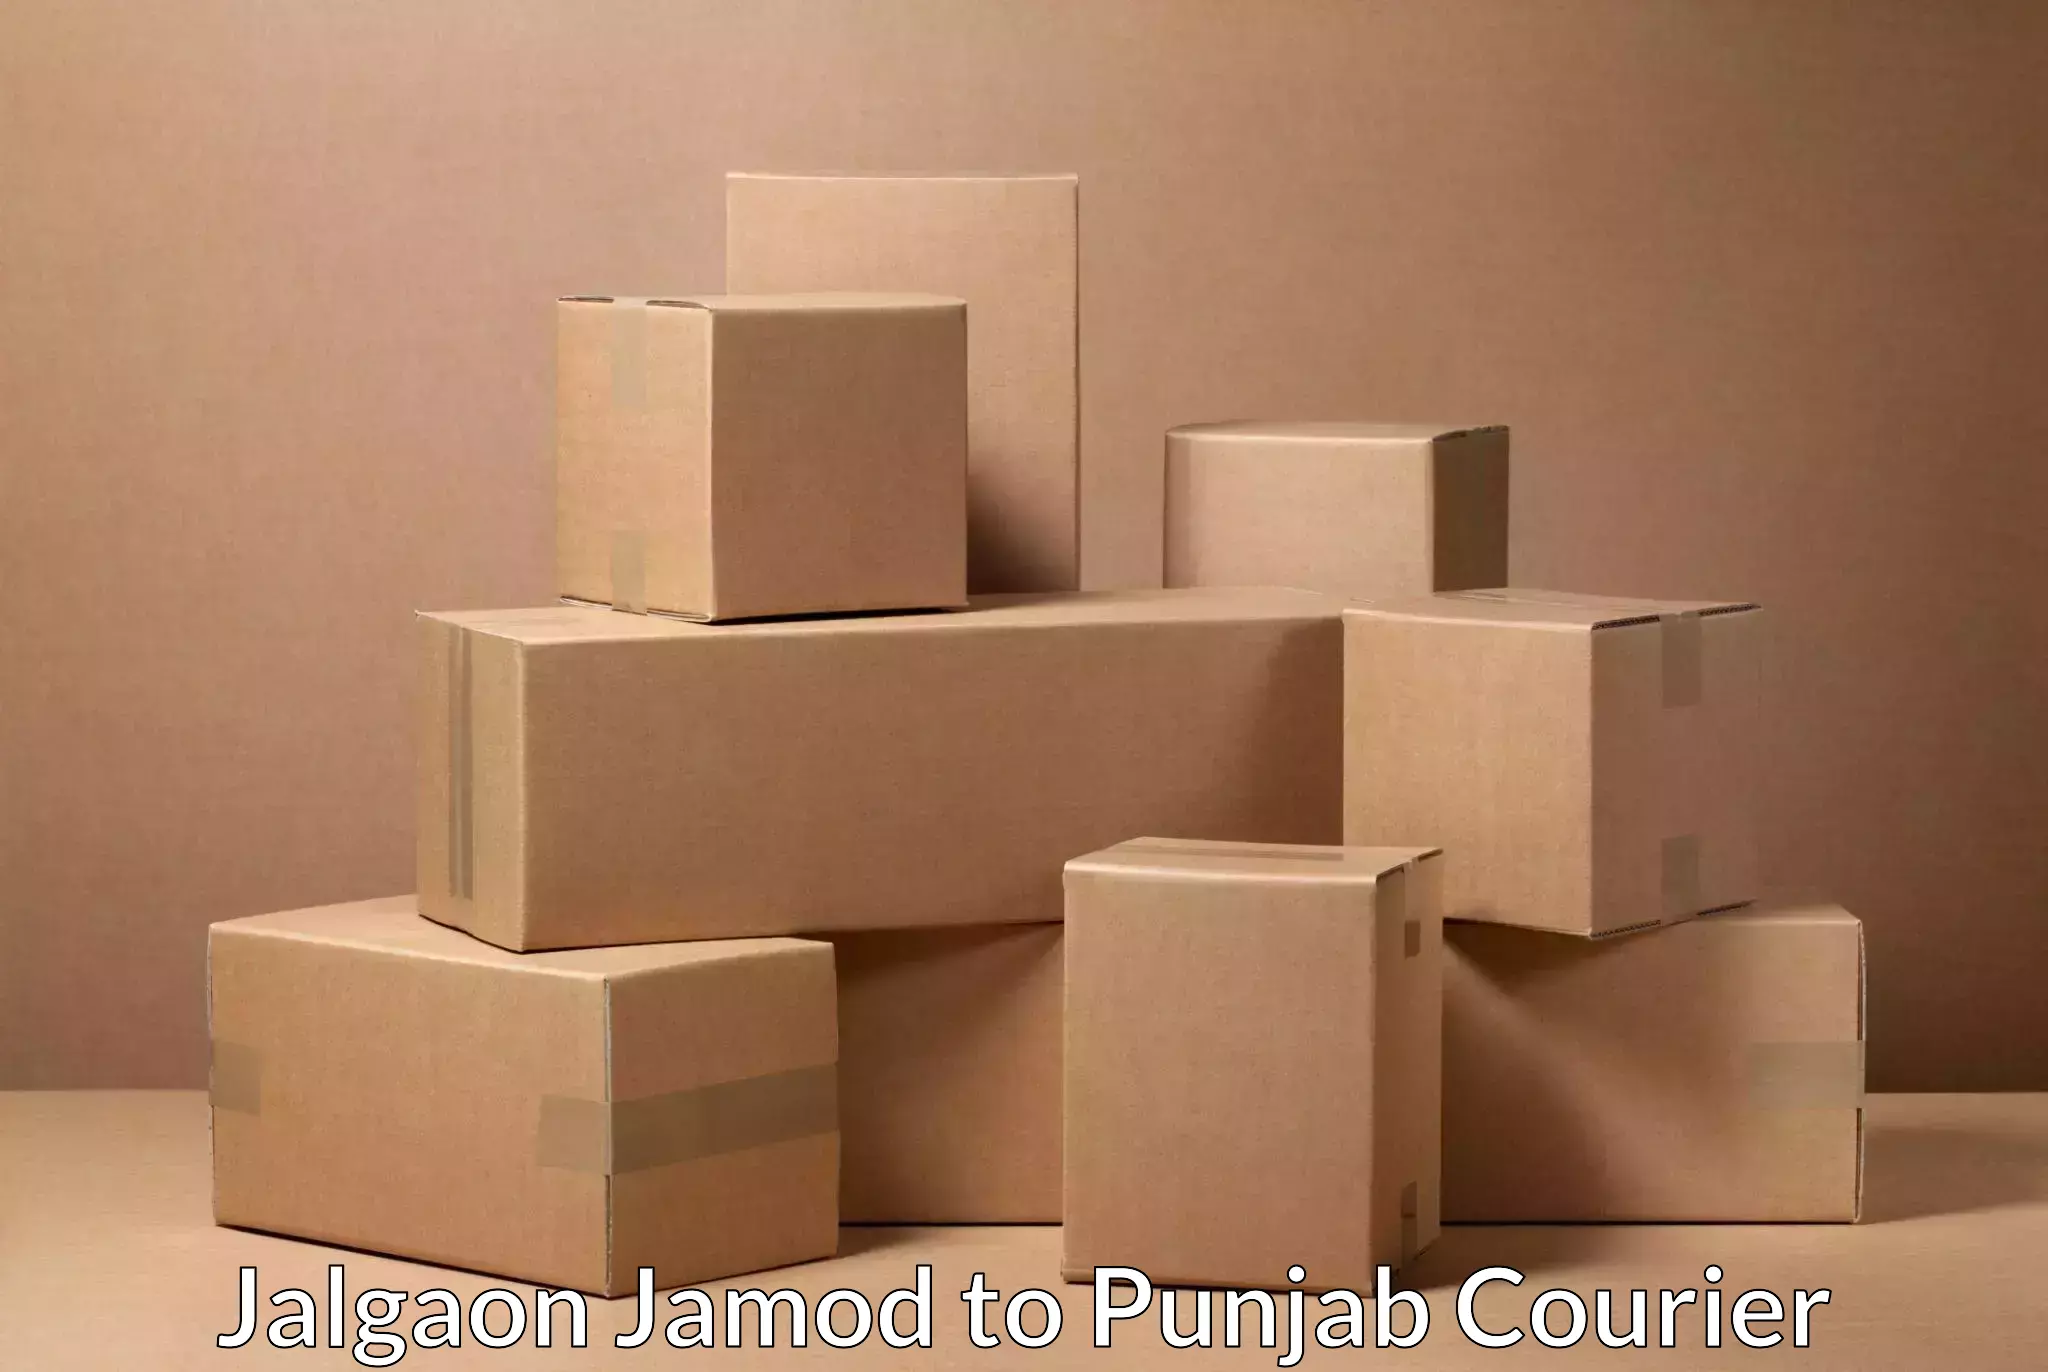 Nationwide parcel services Jalgaon Jamod to Punjab